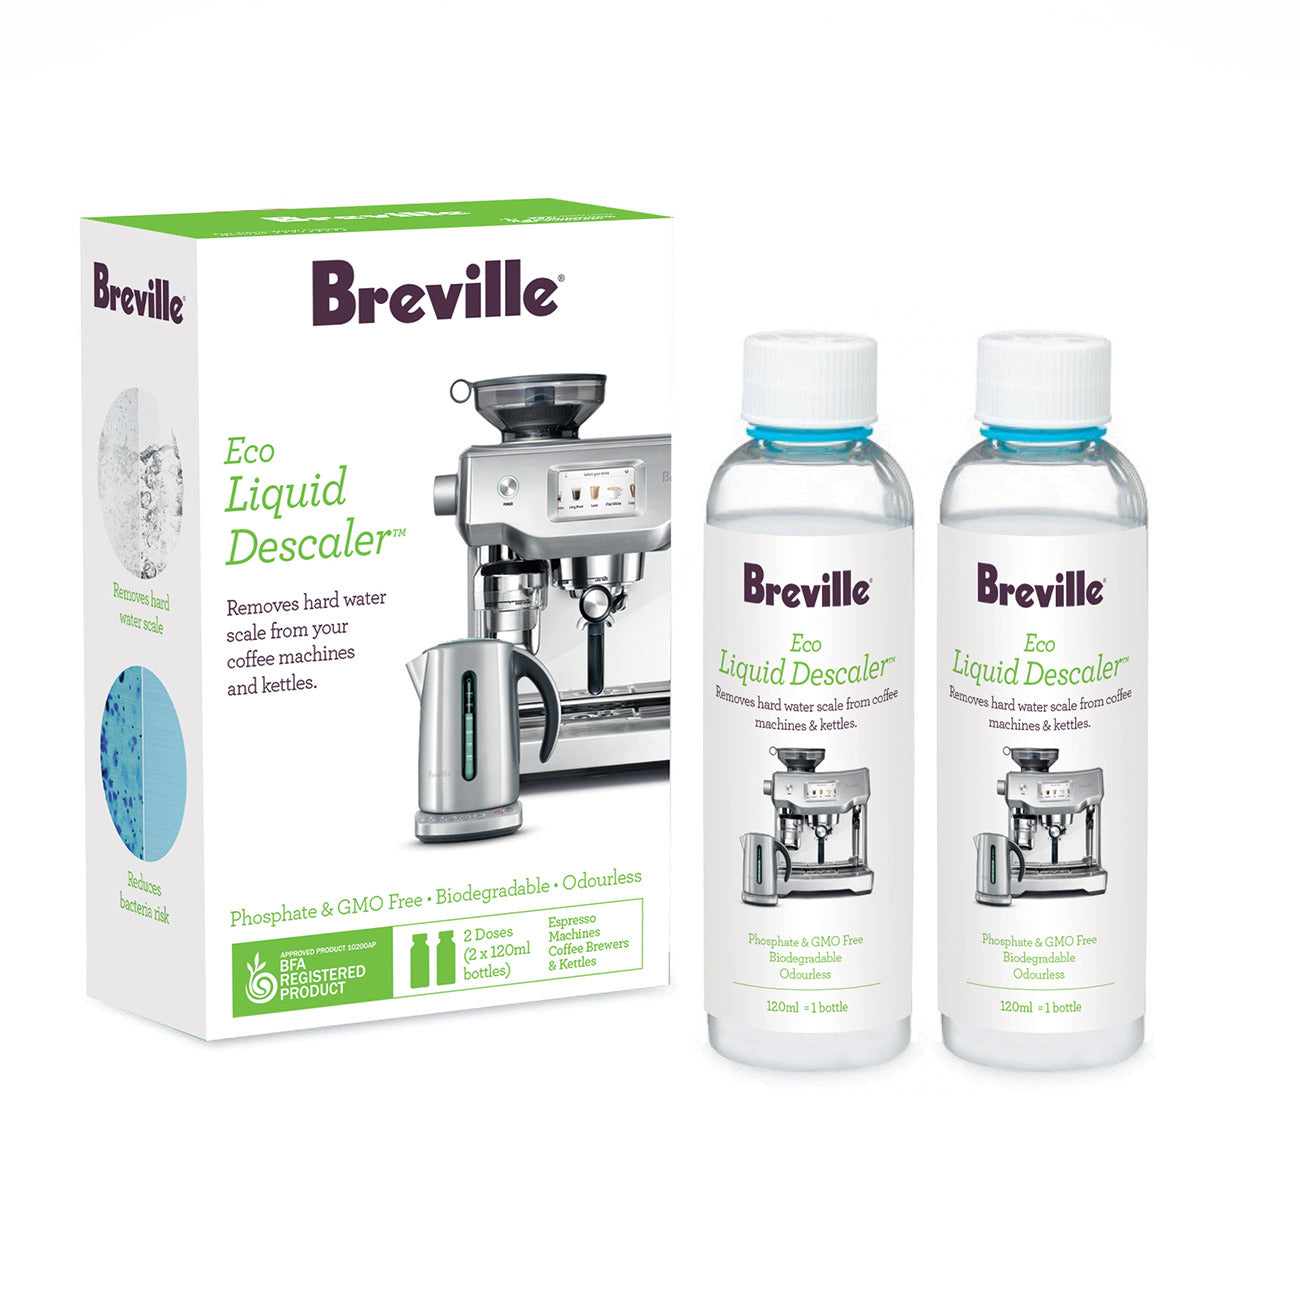 Breville Eco Liquid Descaler - 2 bottles*120ml